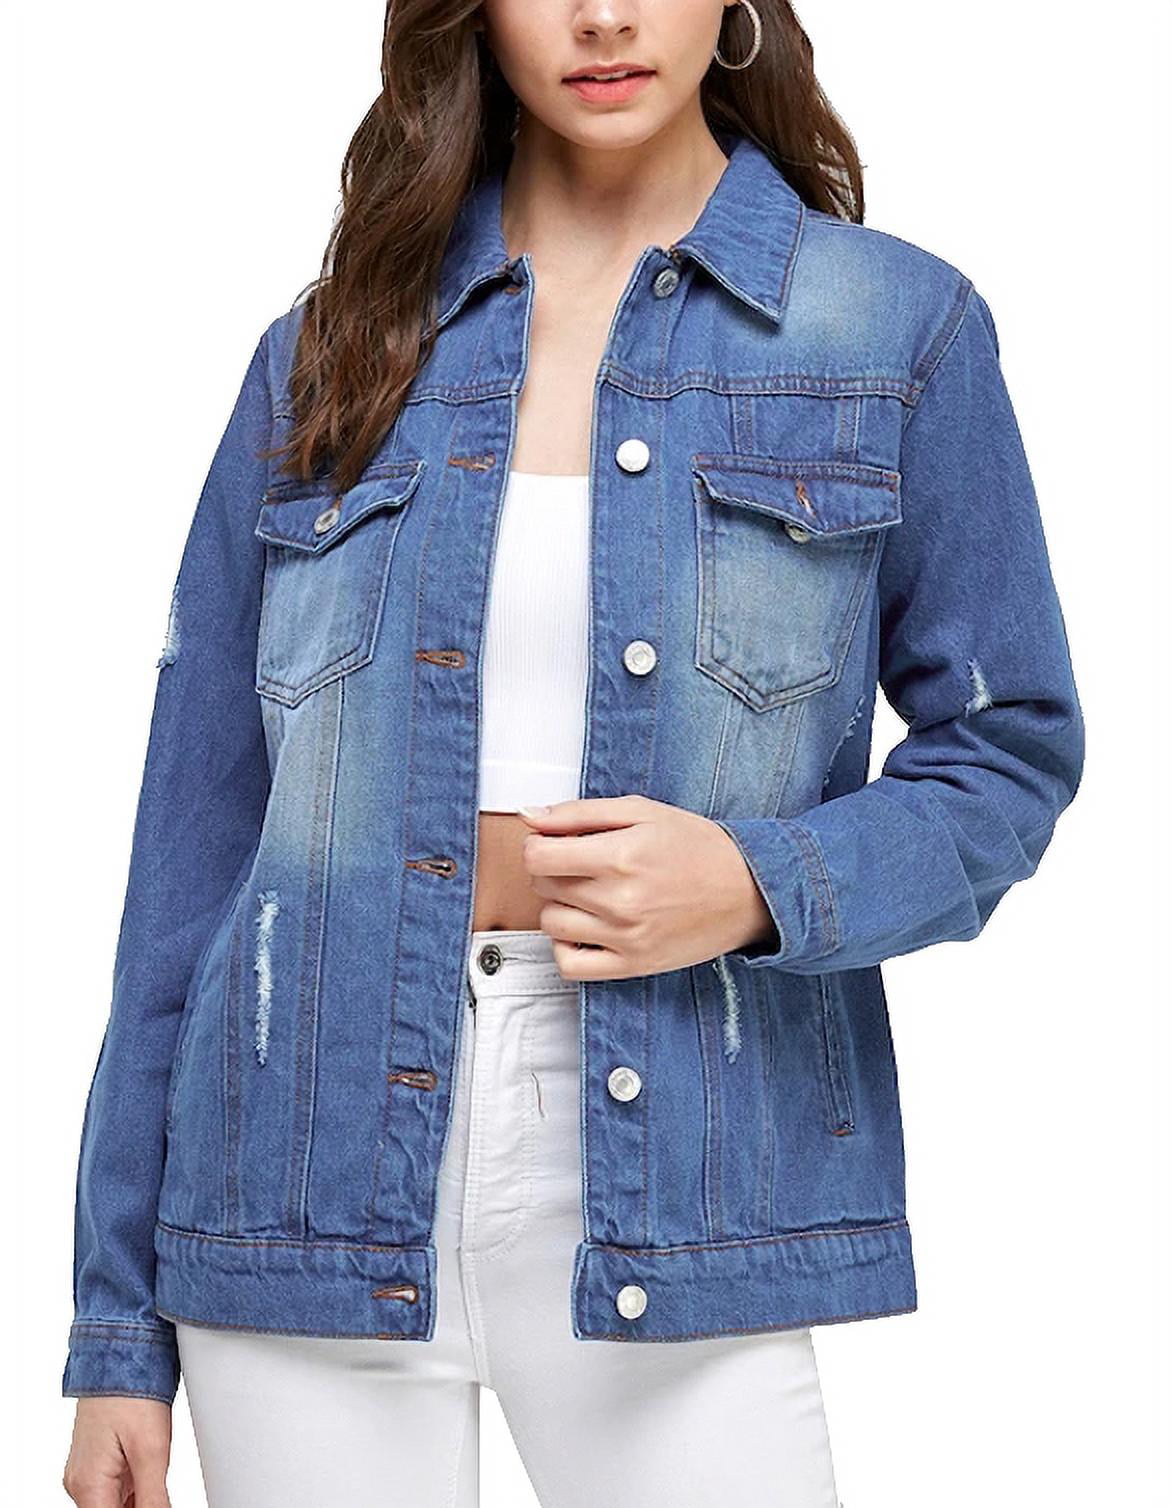 Women's Distressed Denim Cotton Button Up Long Military Utility Jean Jacket 